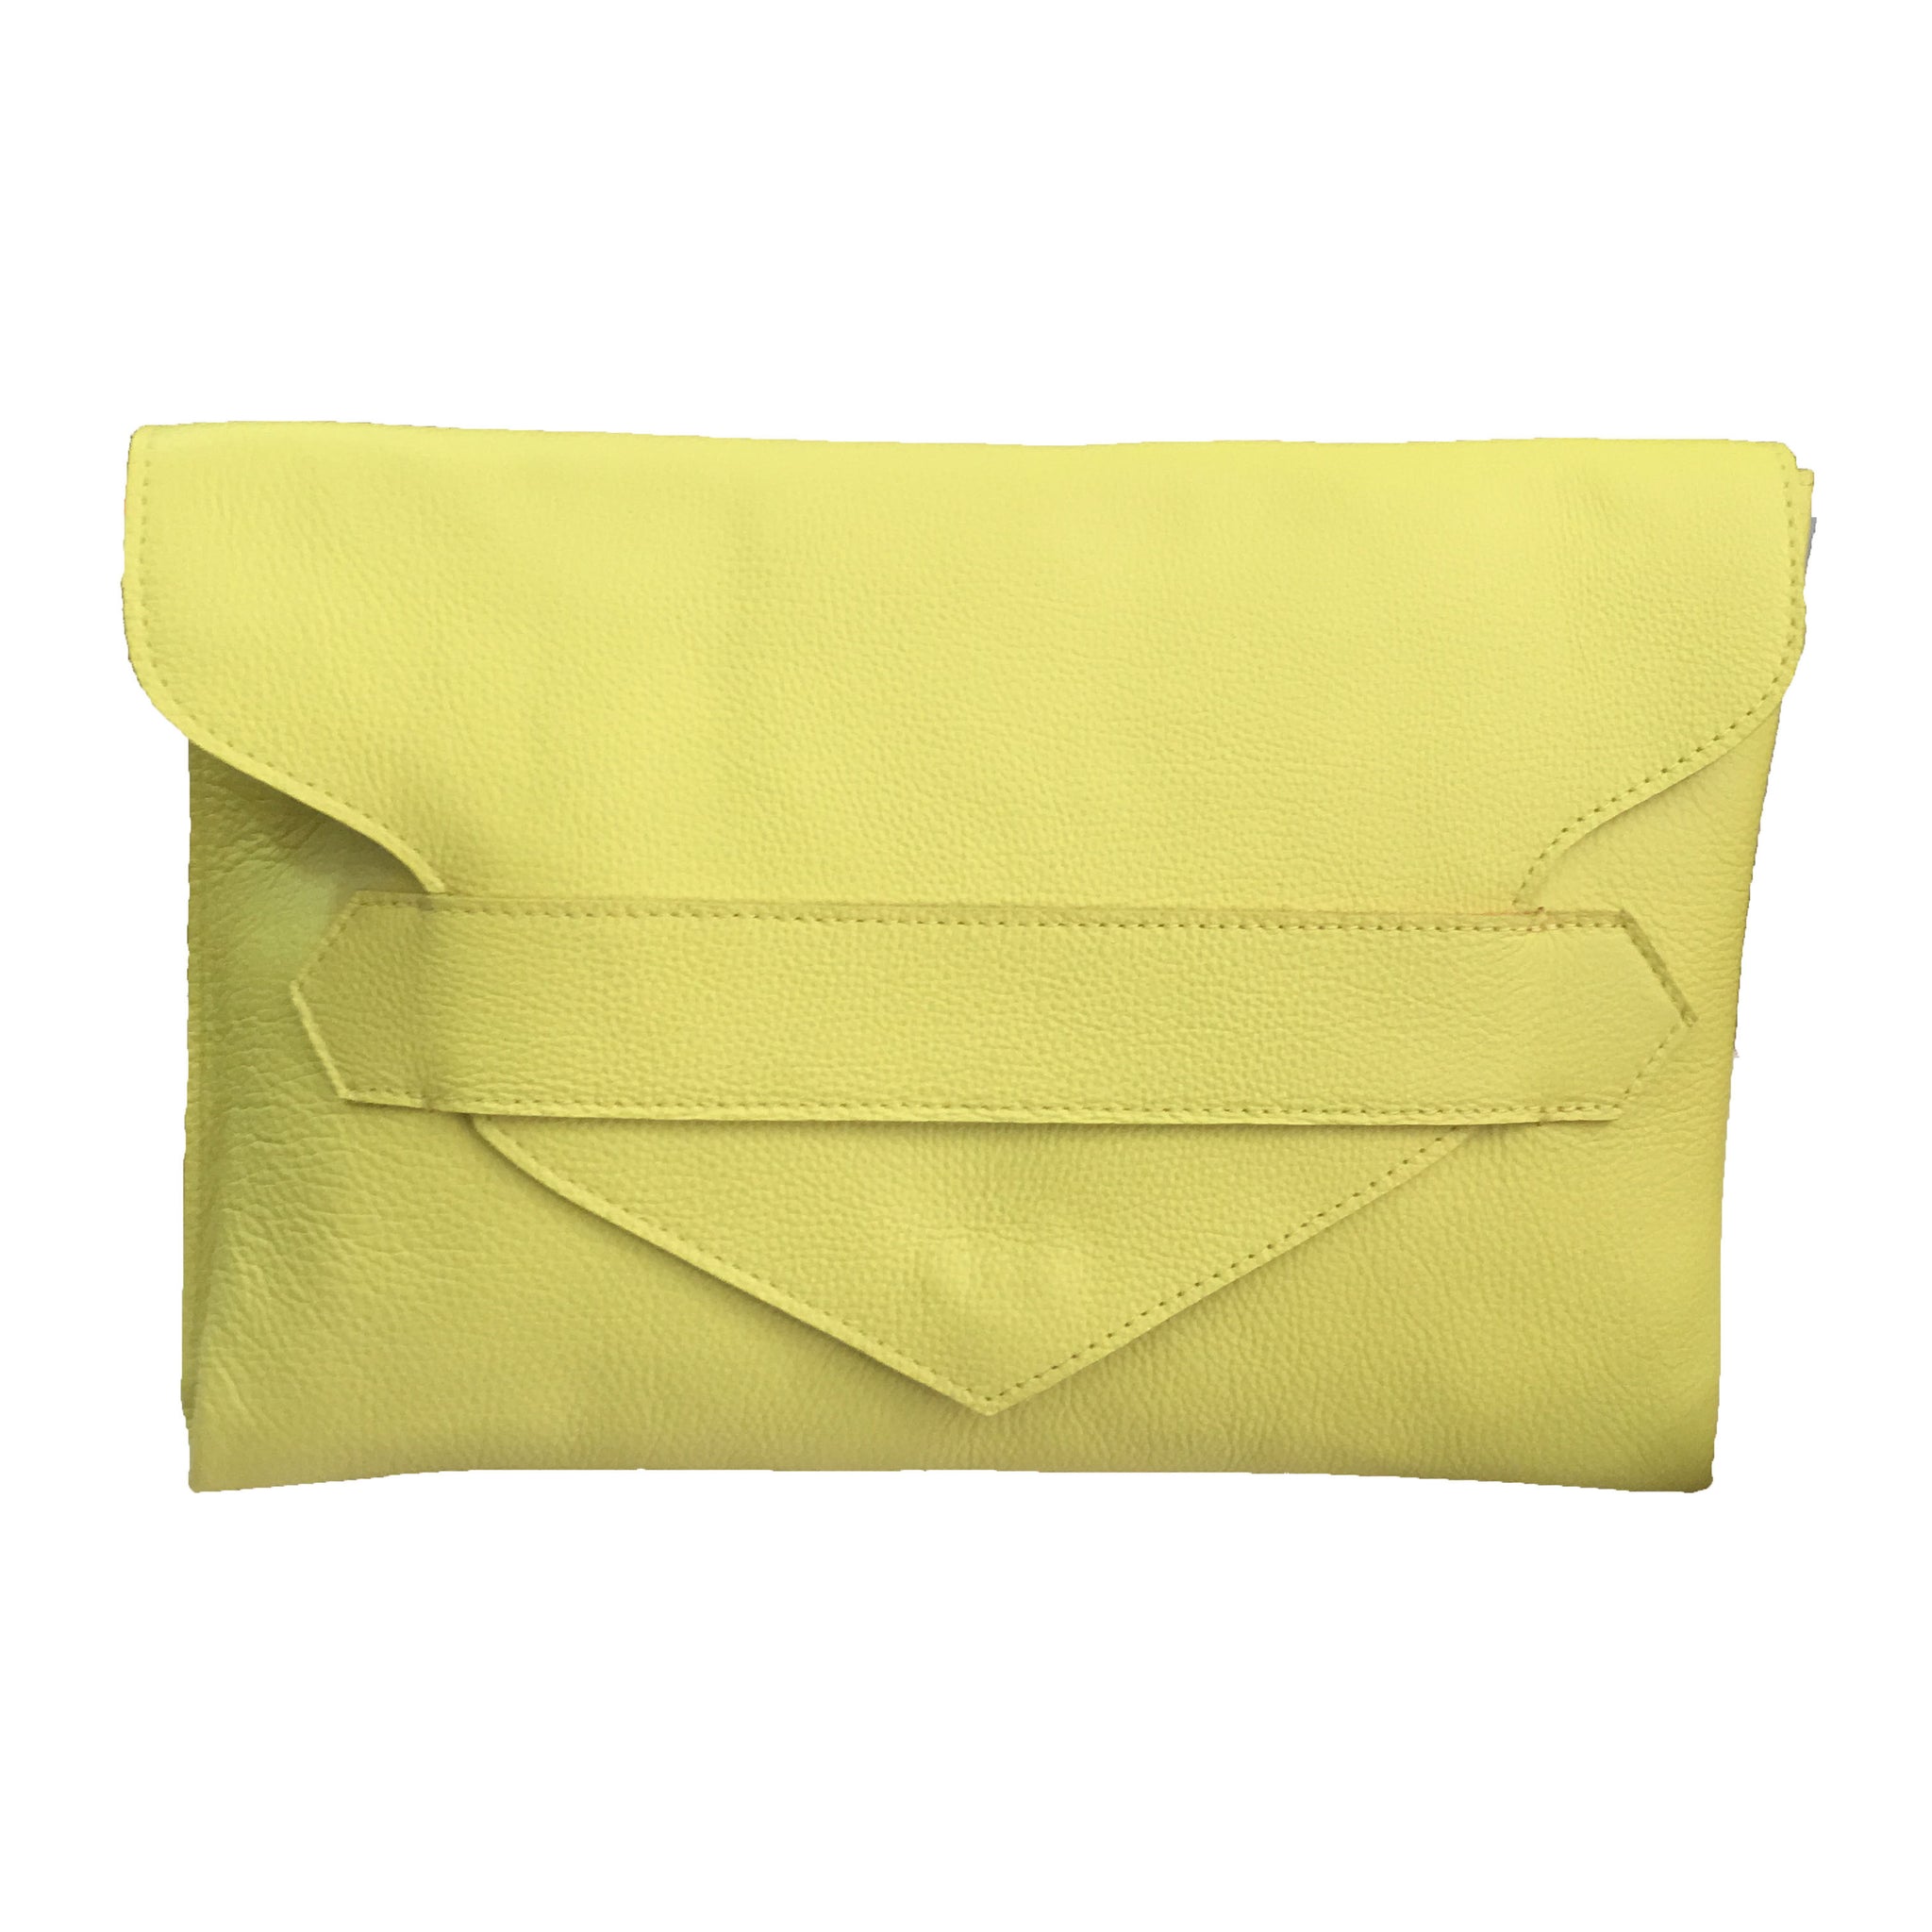 Mustard yellow leather handbag - Gem